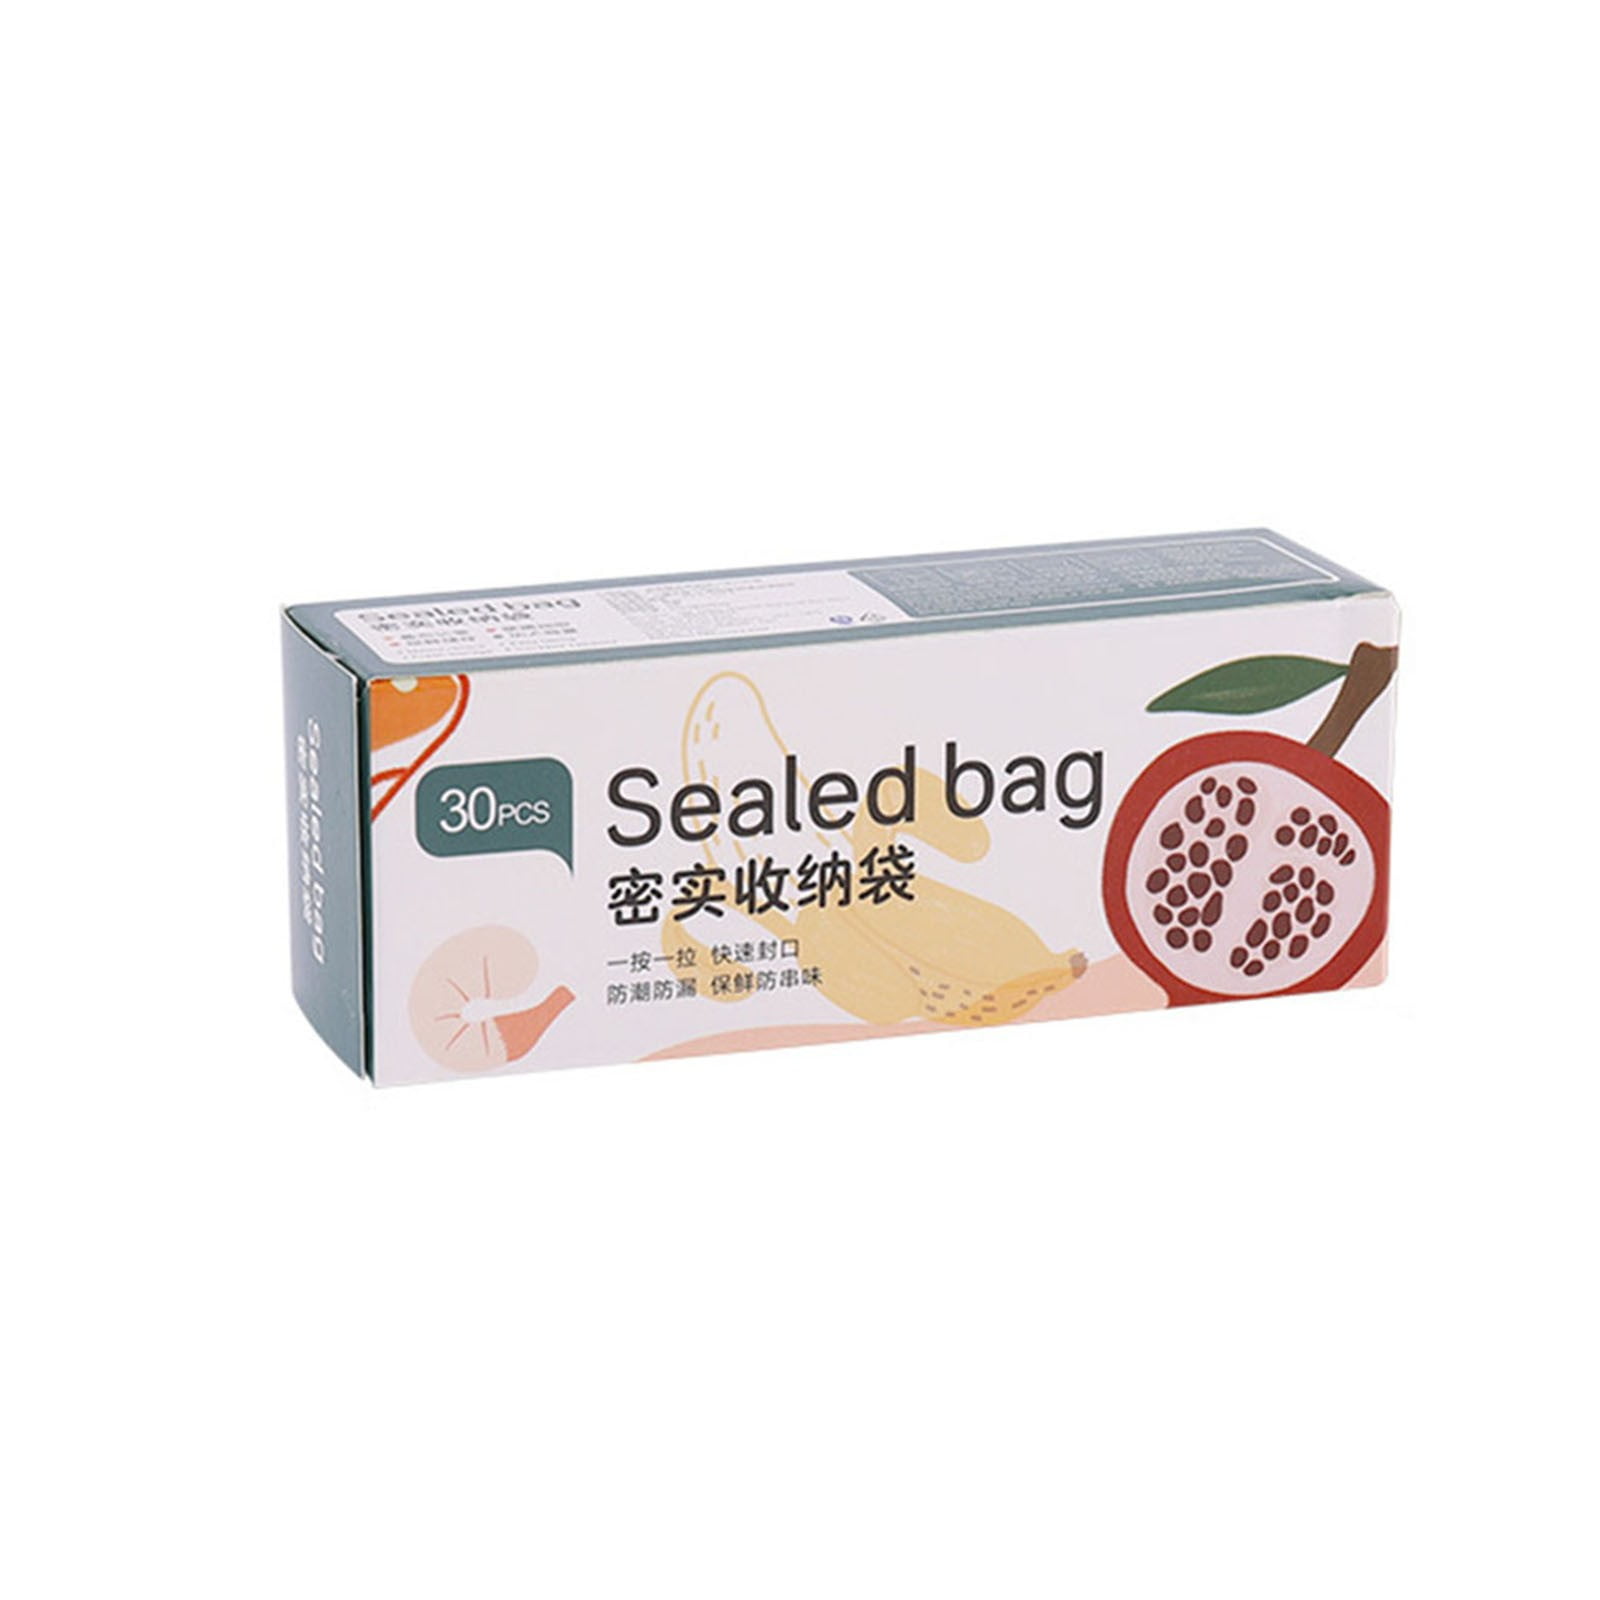 Buy Wholesale China Reusable Silicone Food Bag &foldable Freezer